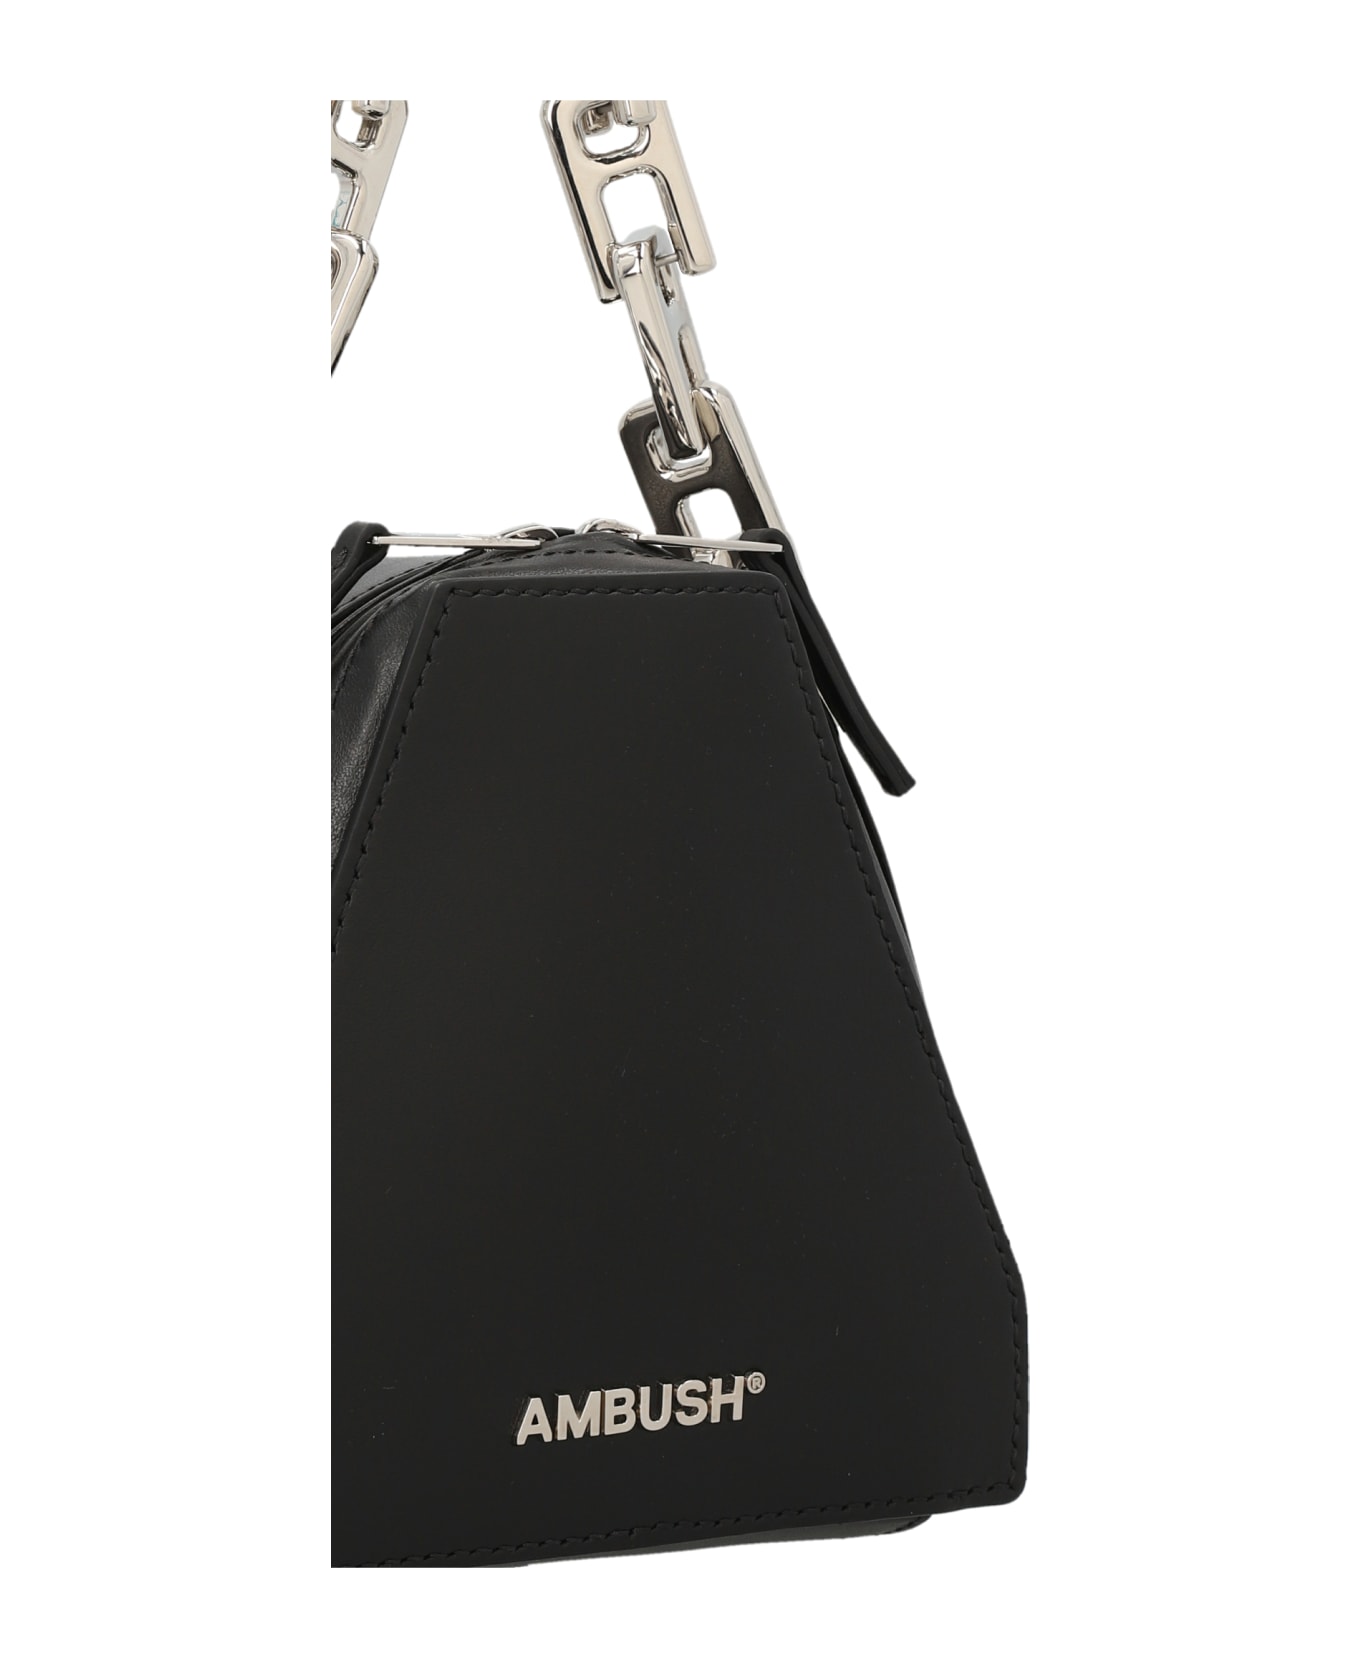 AMBUSH 'small Tri' Crossbody Bag AMBUSH - BLACK ショルダーバッグ